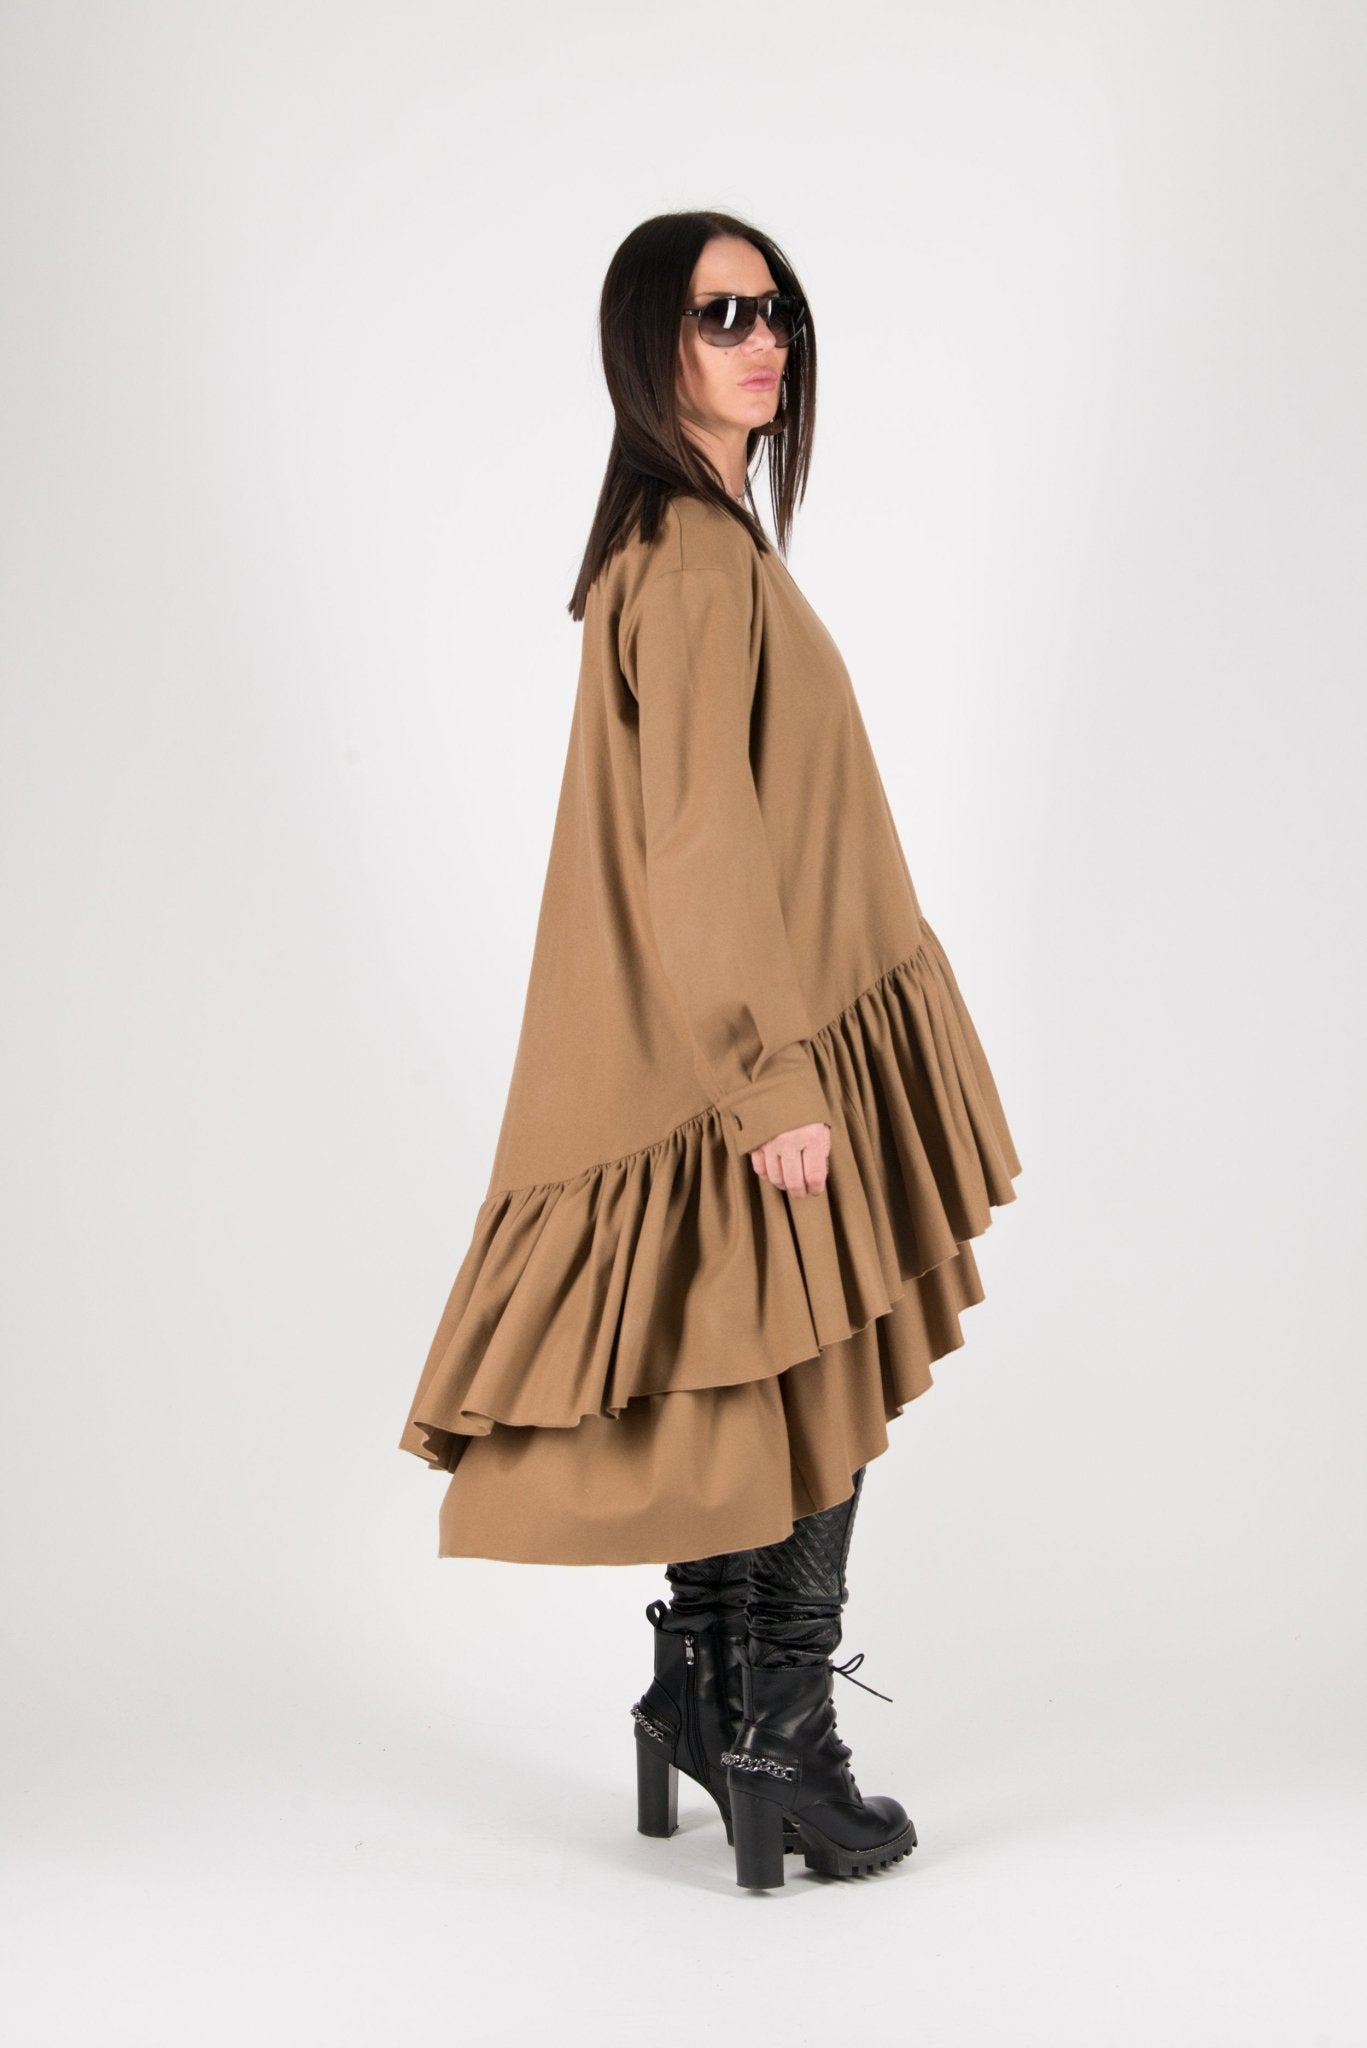 Wool Dress MORANY SALE - EUG FASHION EugFashion 